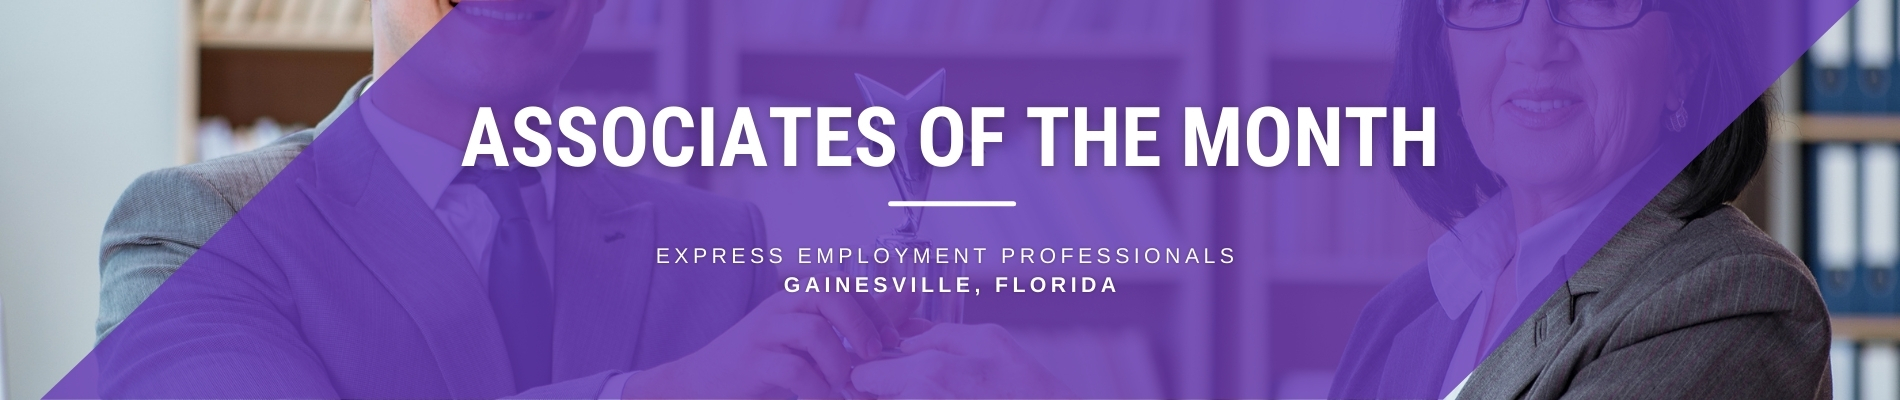 Associates of the Month - Gainesville FL Job Centers